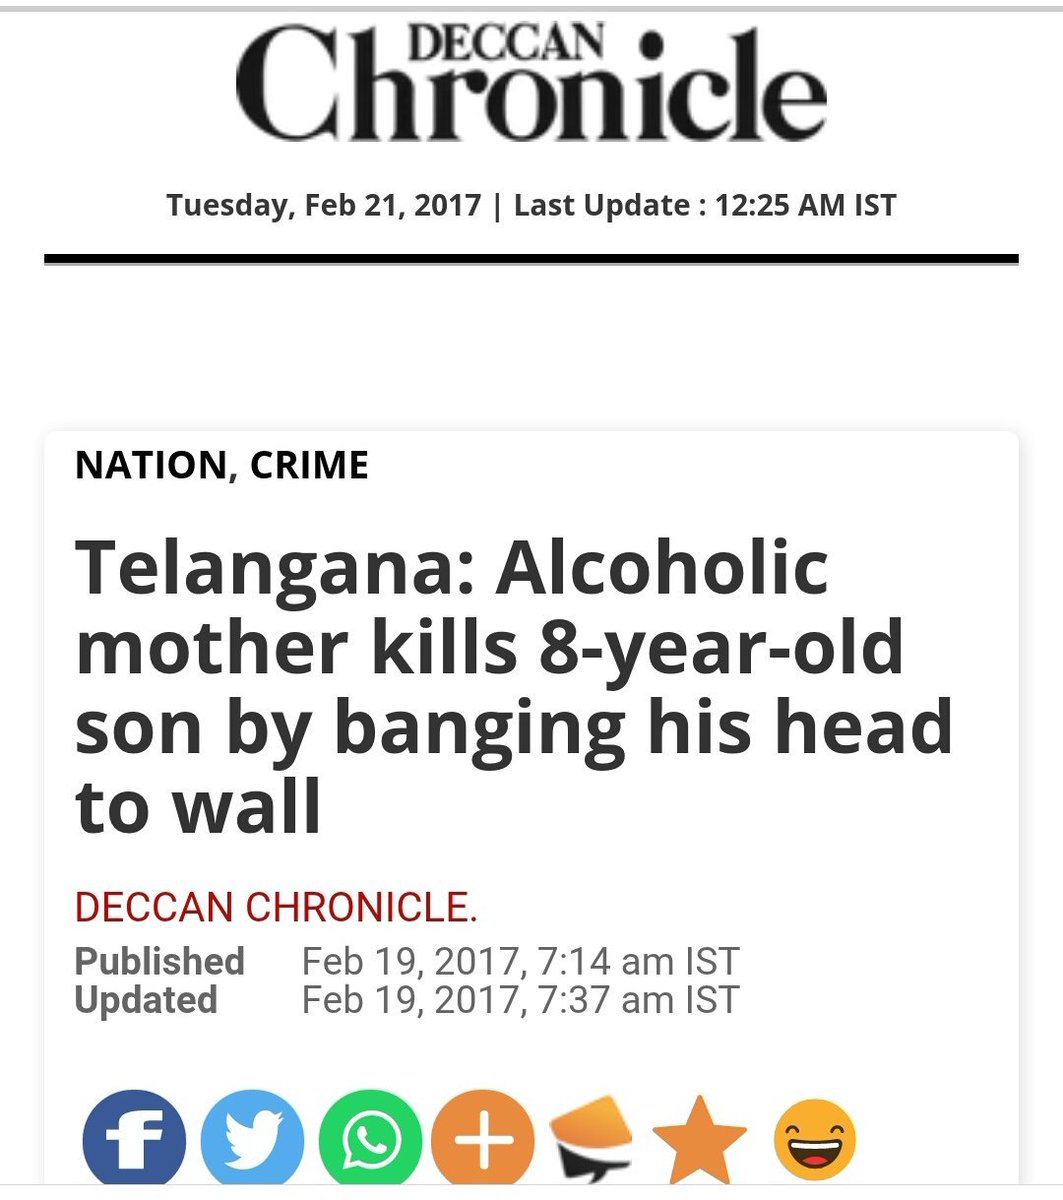 #WomeEmpowerment demand Rs200
mk 13-year-old boy kills self
@Susana swaraj
@rsprasad @TIME @DDNational
#BiasedLaw
m.timesofindia.com/city/meerut/bl…